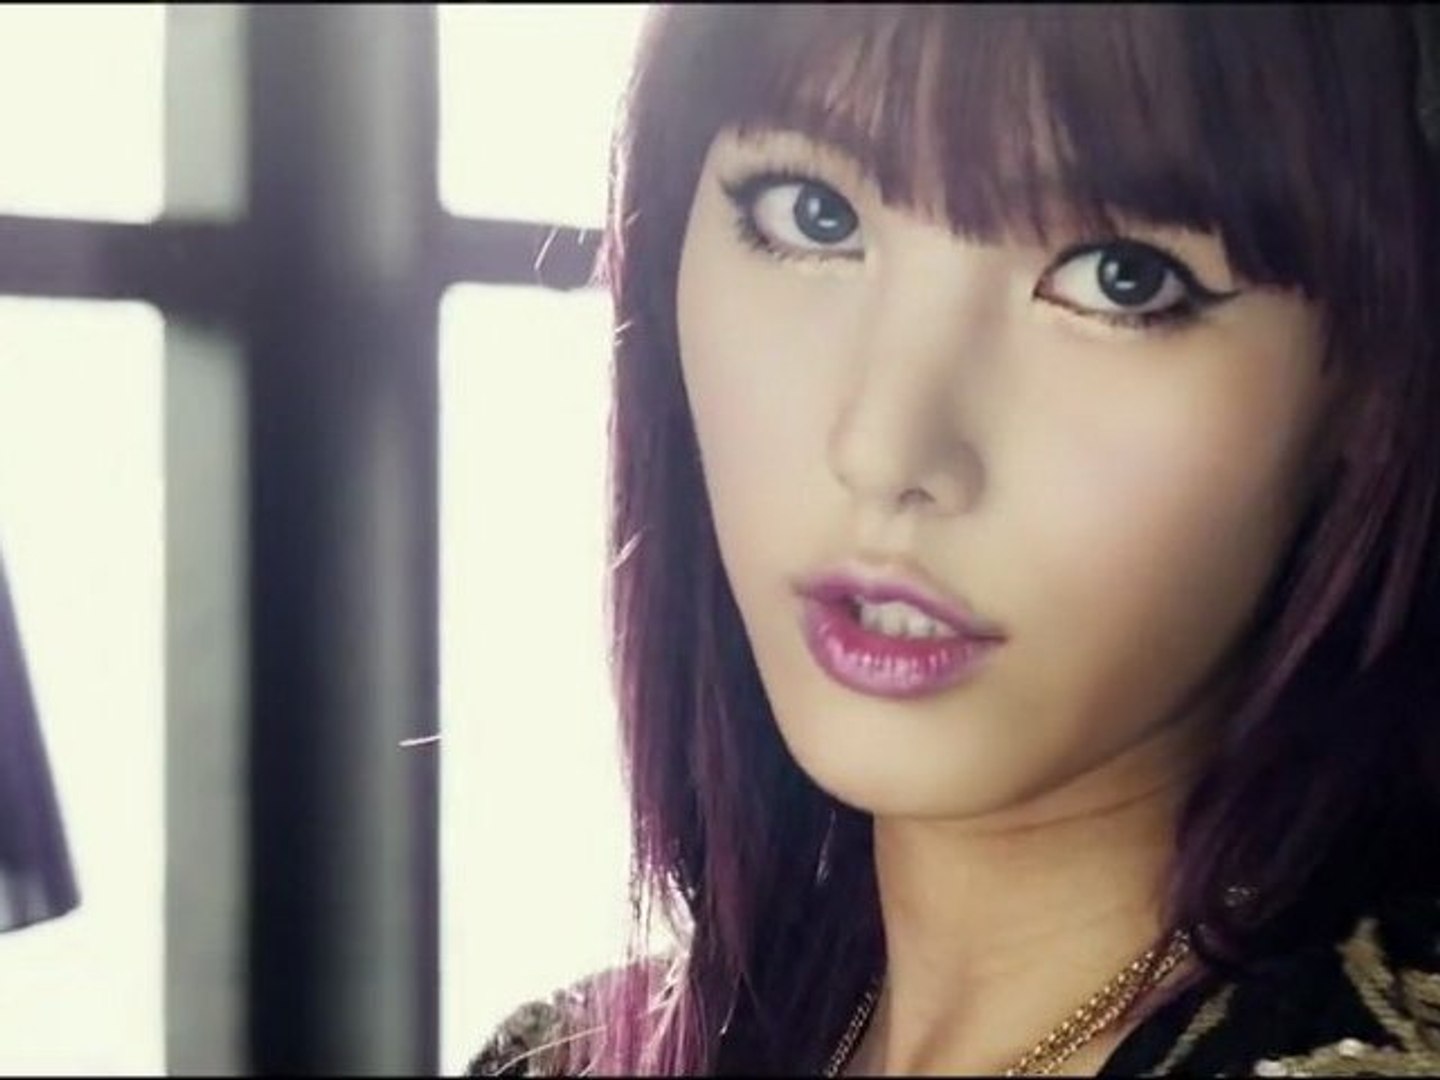 Jewelry - Look At Me, 쥬얼리 미니앨범 룩앳미 [MV HD]  Music Video - 2012.10.11,  More Musical Videos - http://